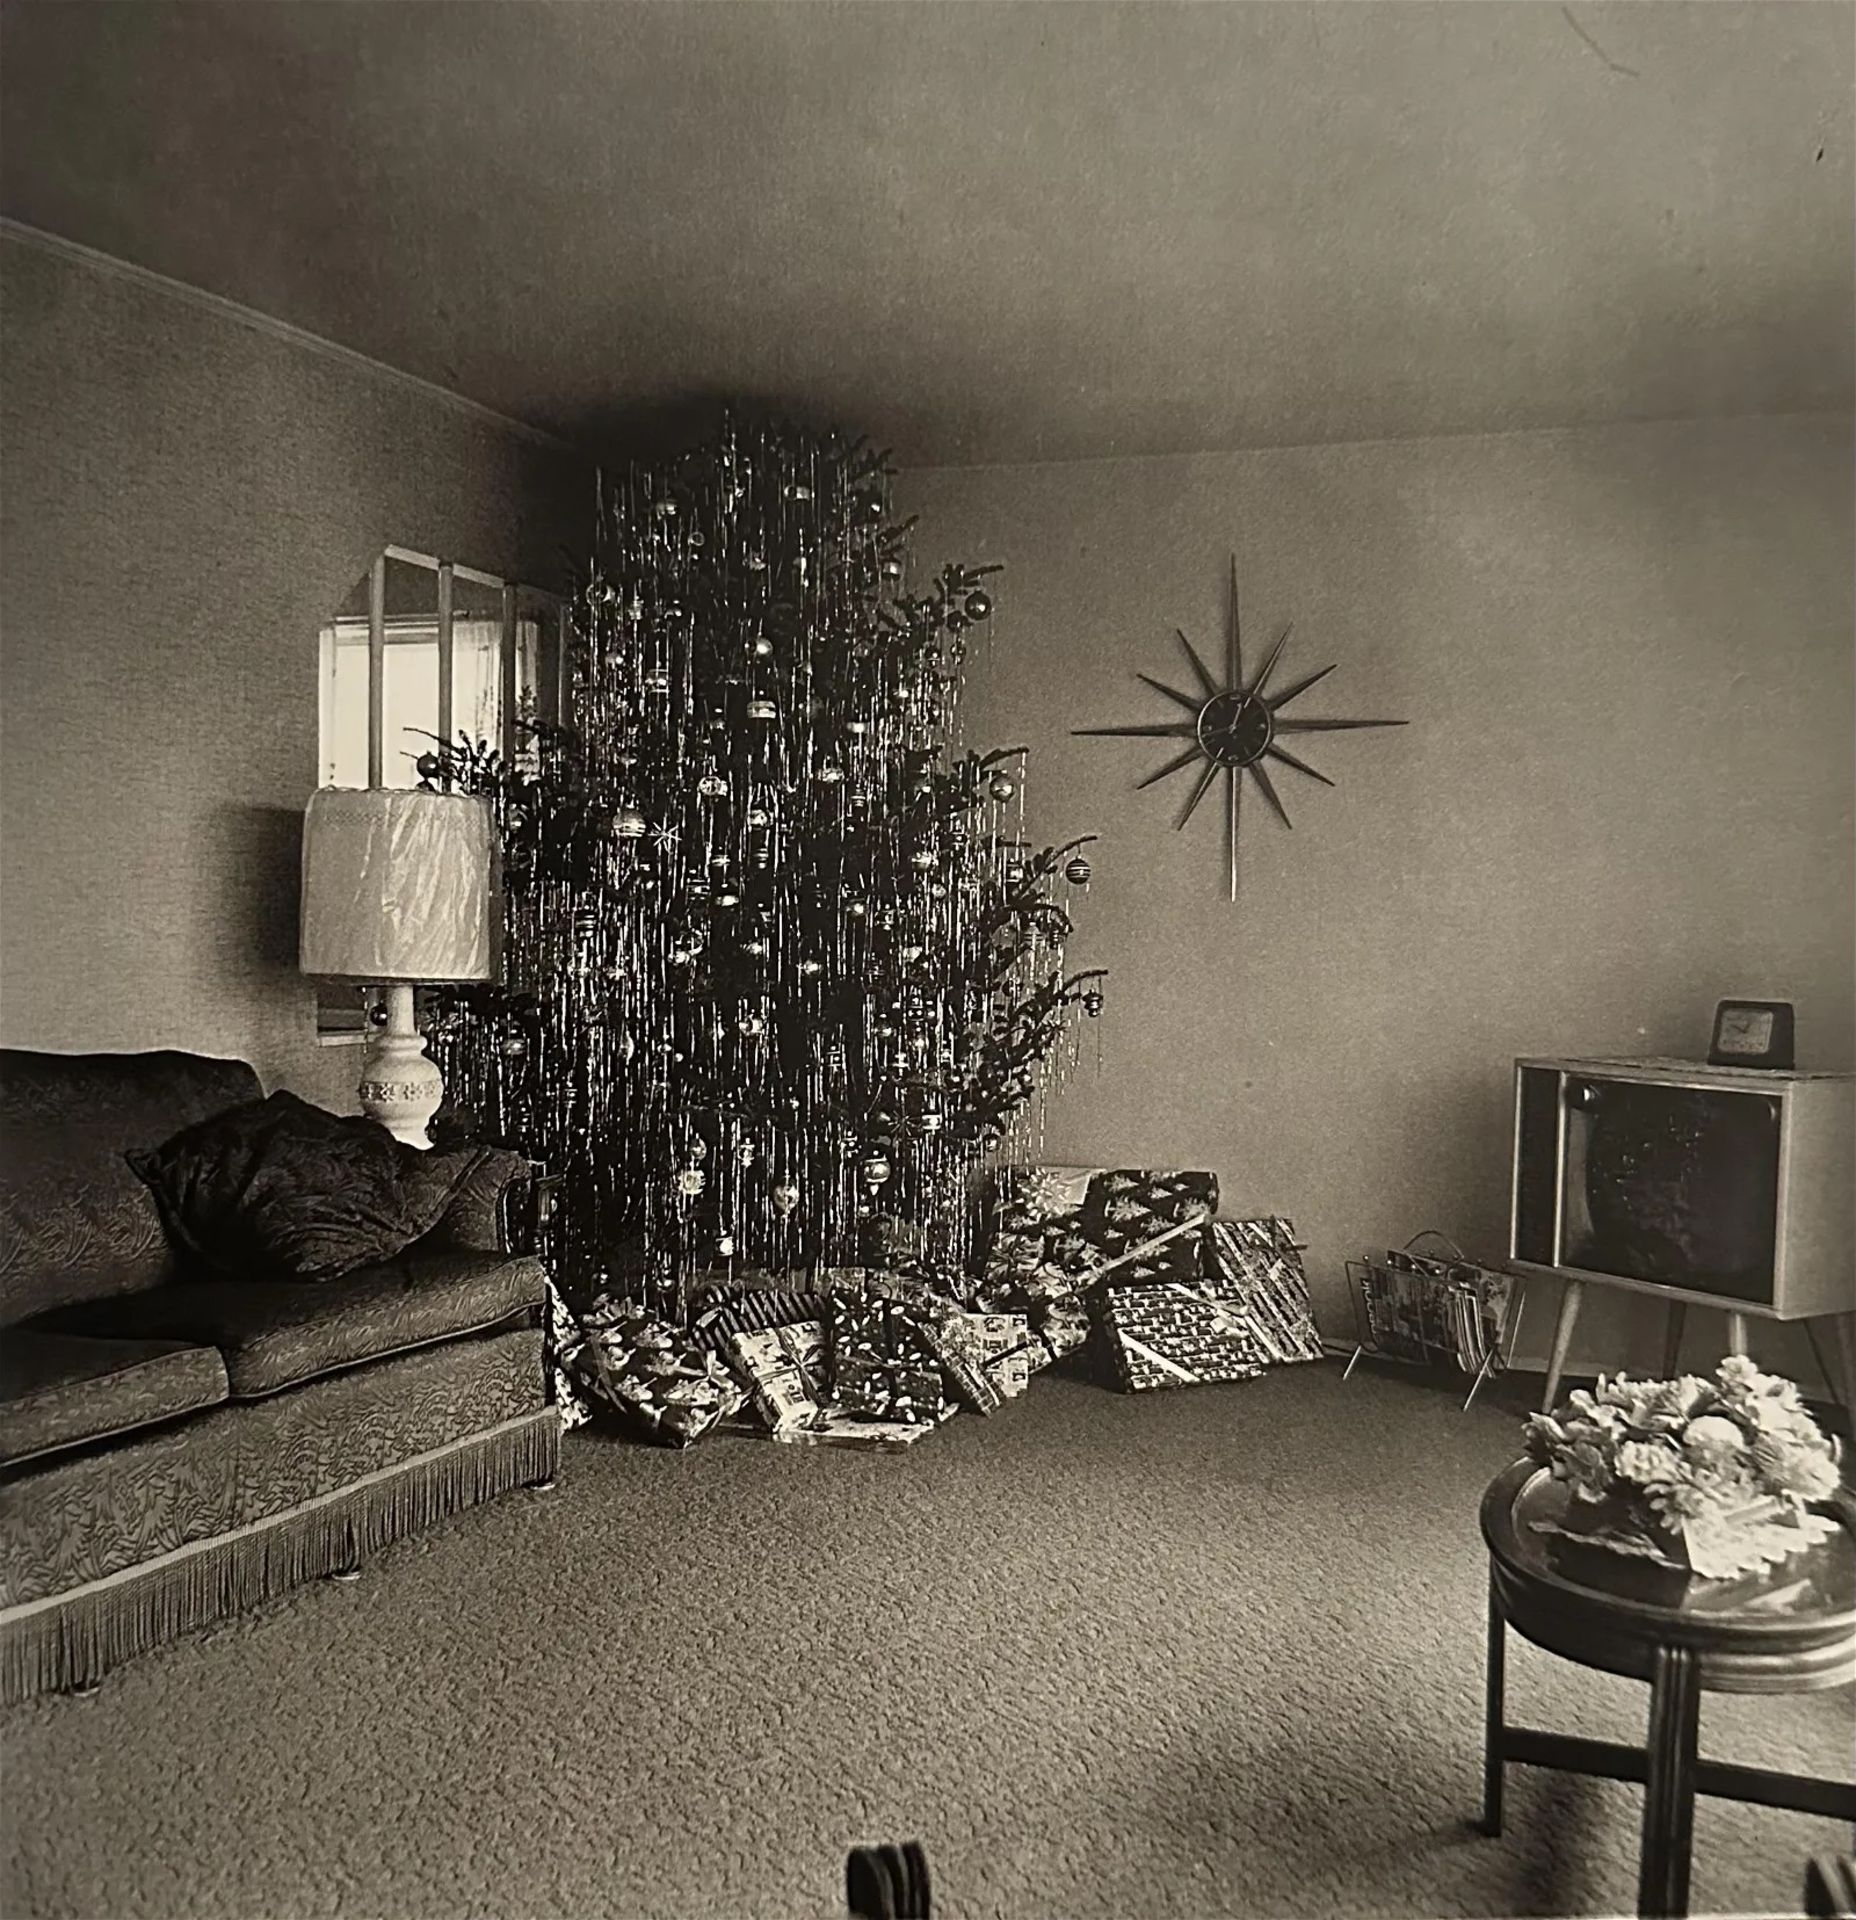 Diane Arbus "Xmas tree in a living room in Levittown, L.I. 1963" Print.
